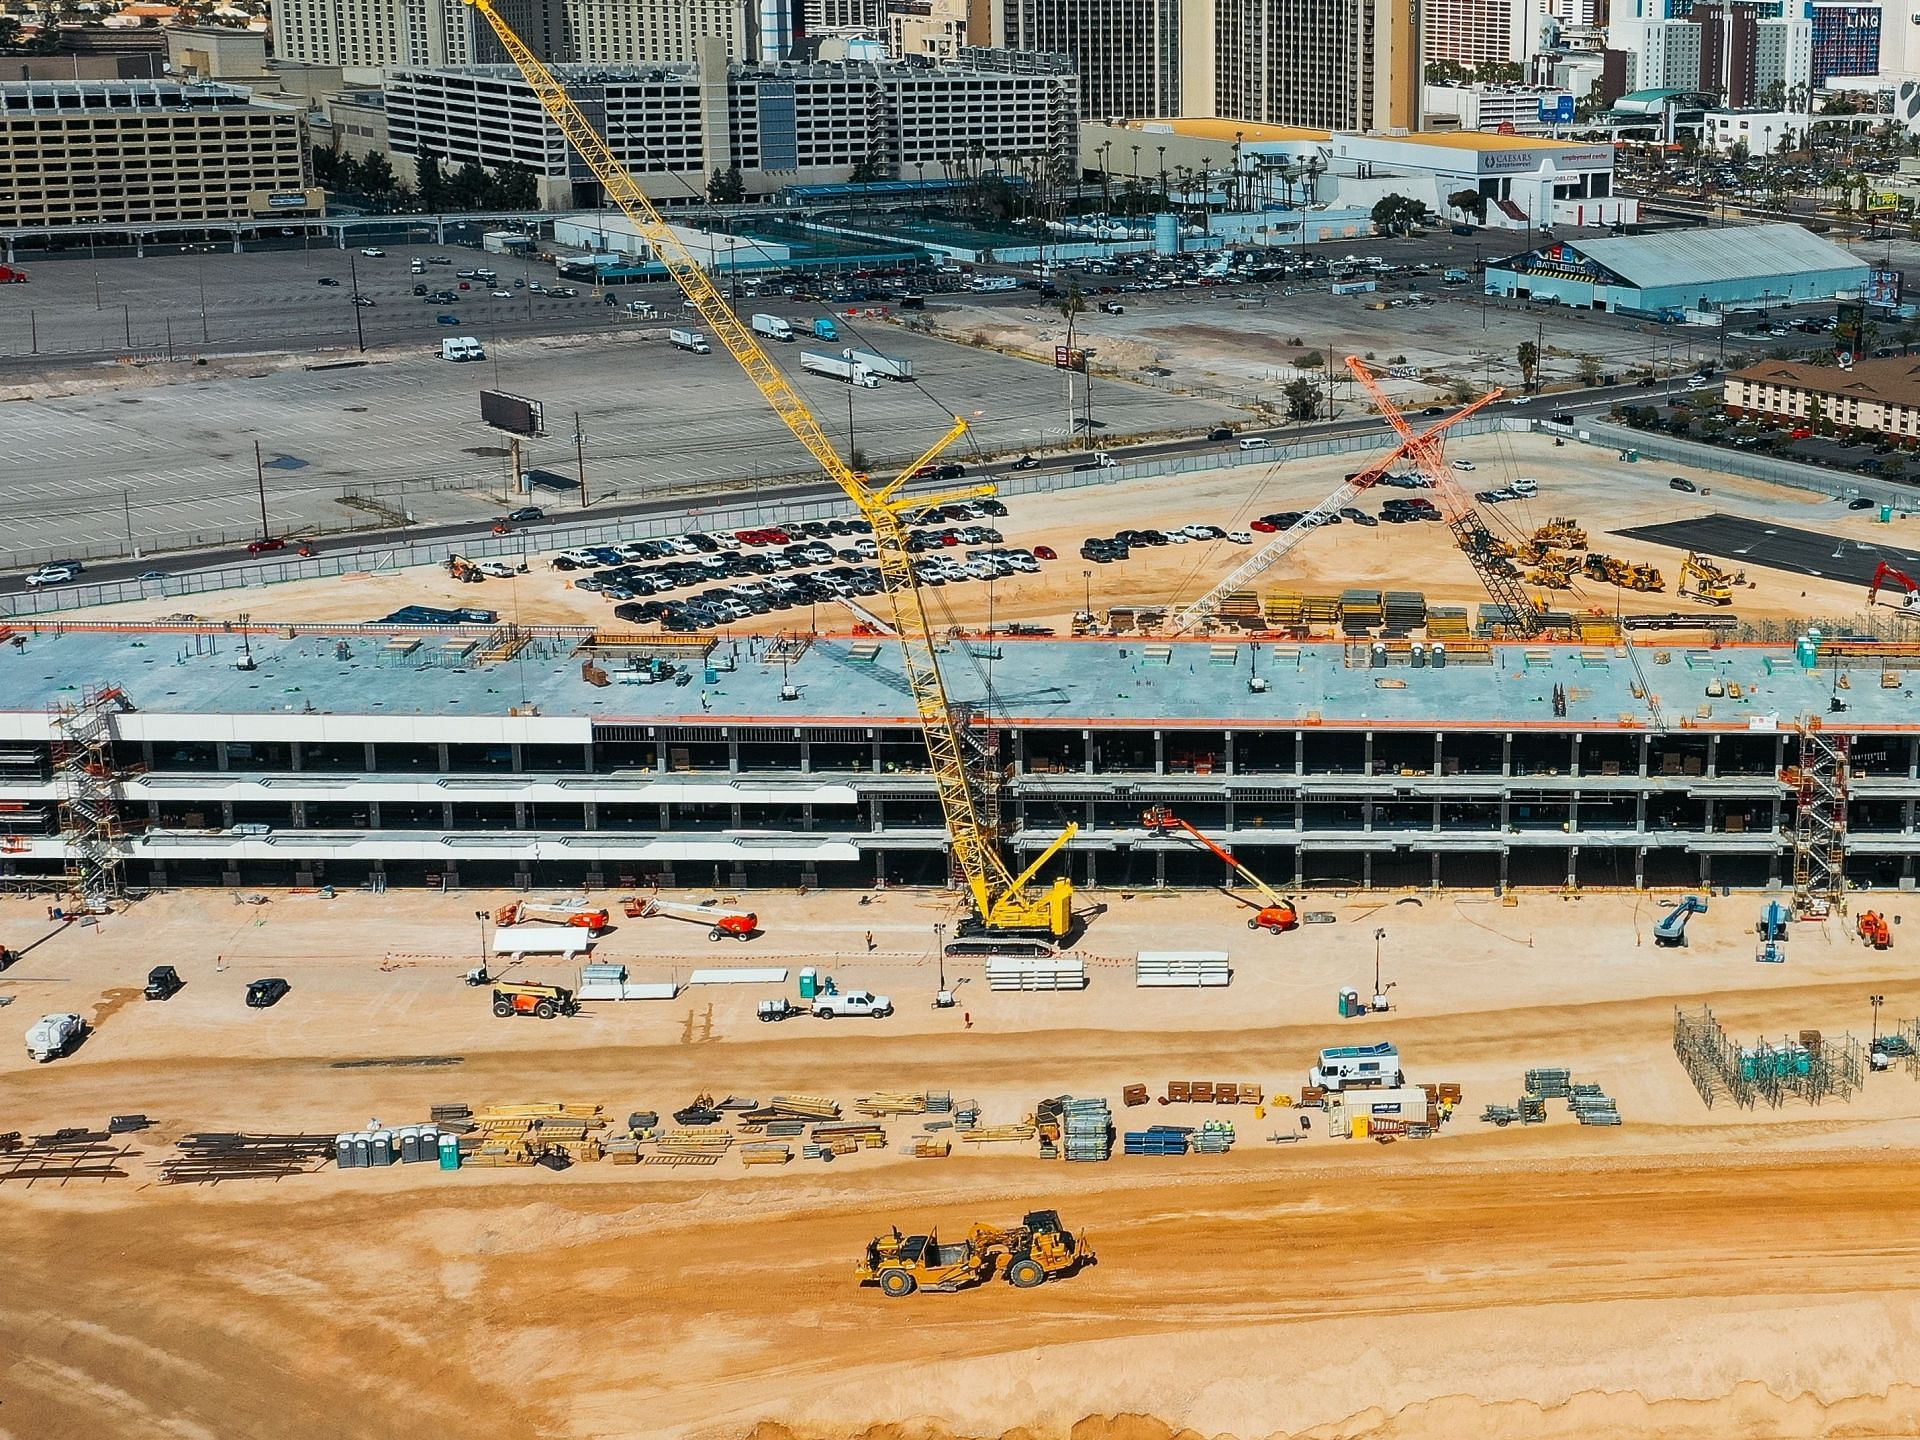 Paddock construction in Las Vegas for the 2023 F1 Las Vegas Grand Prix (Image via Twitter/@F1LasVegas)